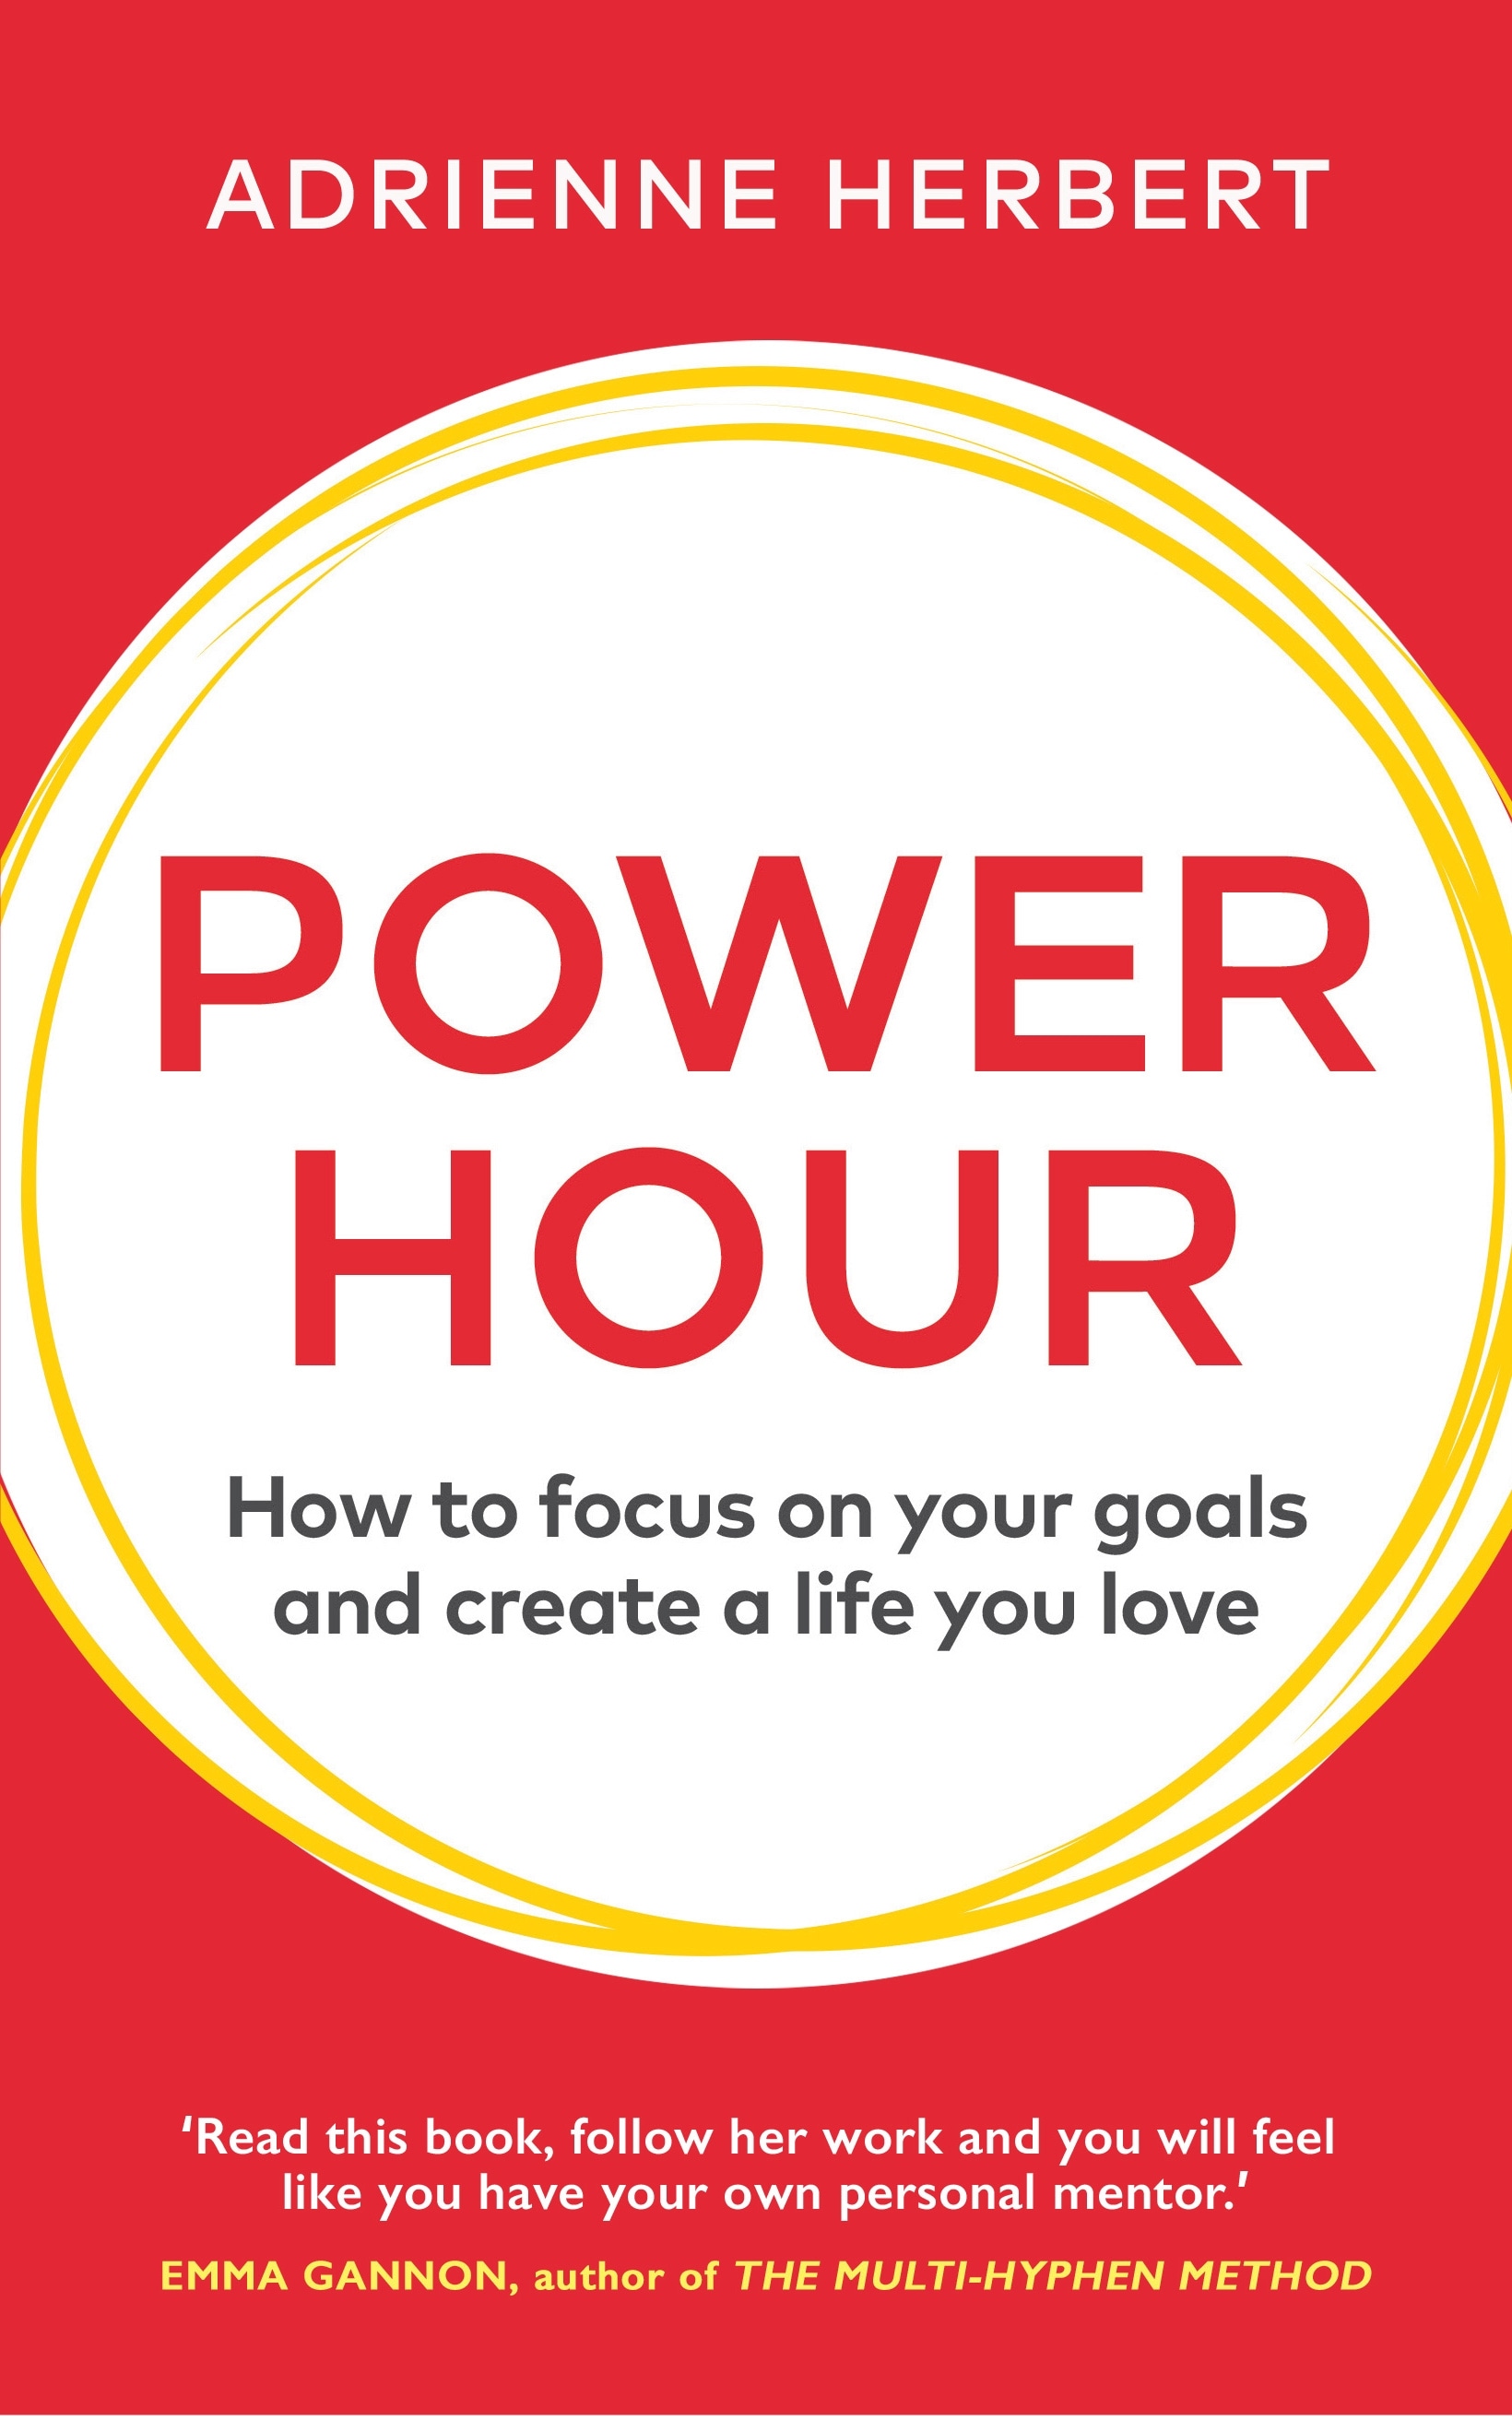 Book “Power Hour” by Adrienne Herbert — December 31, 2020